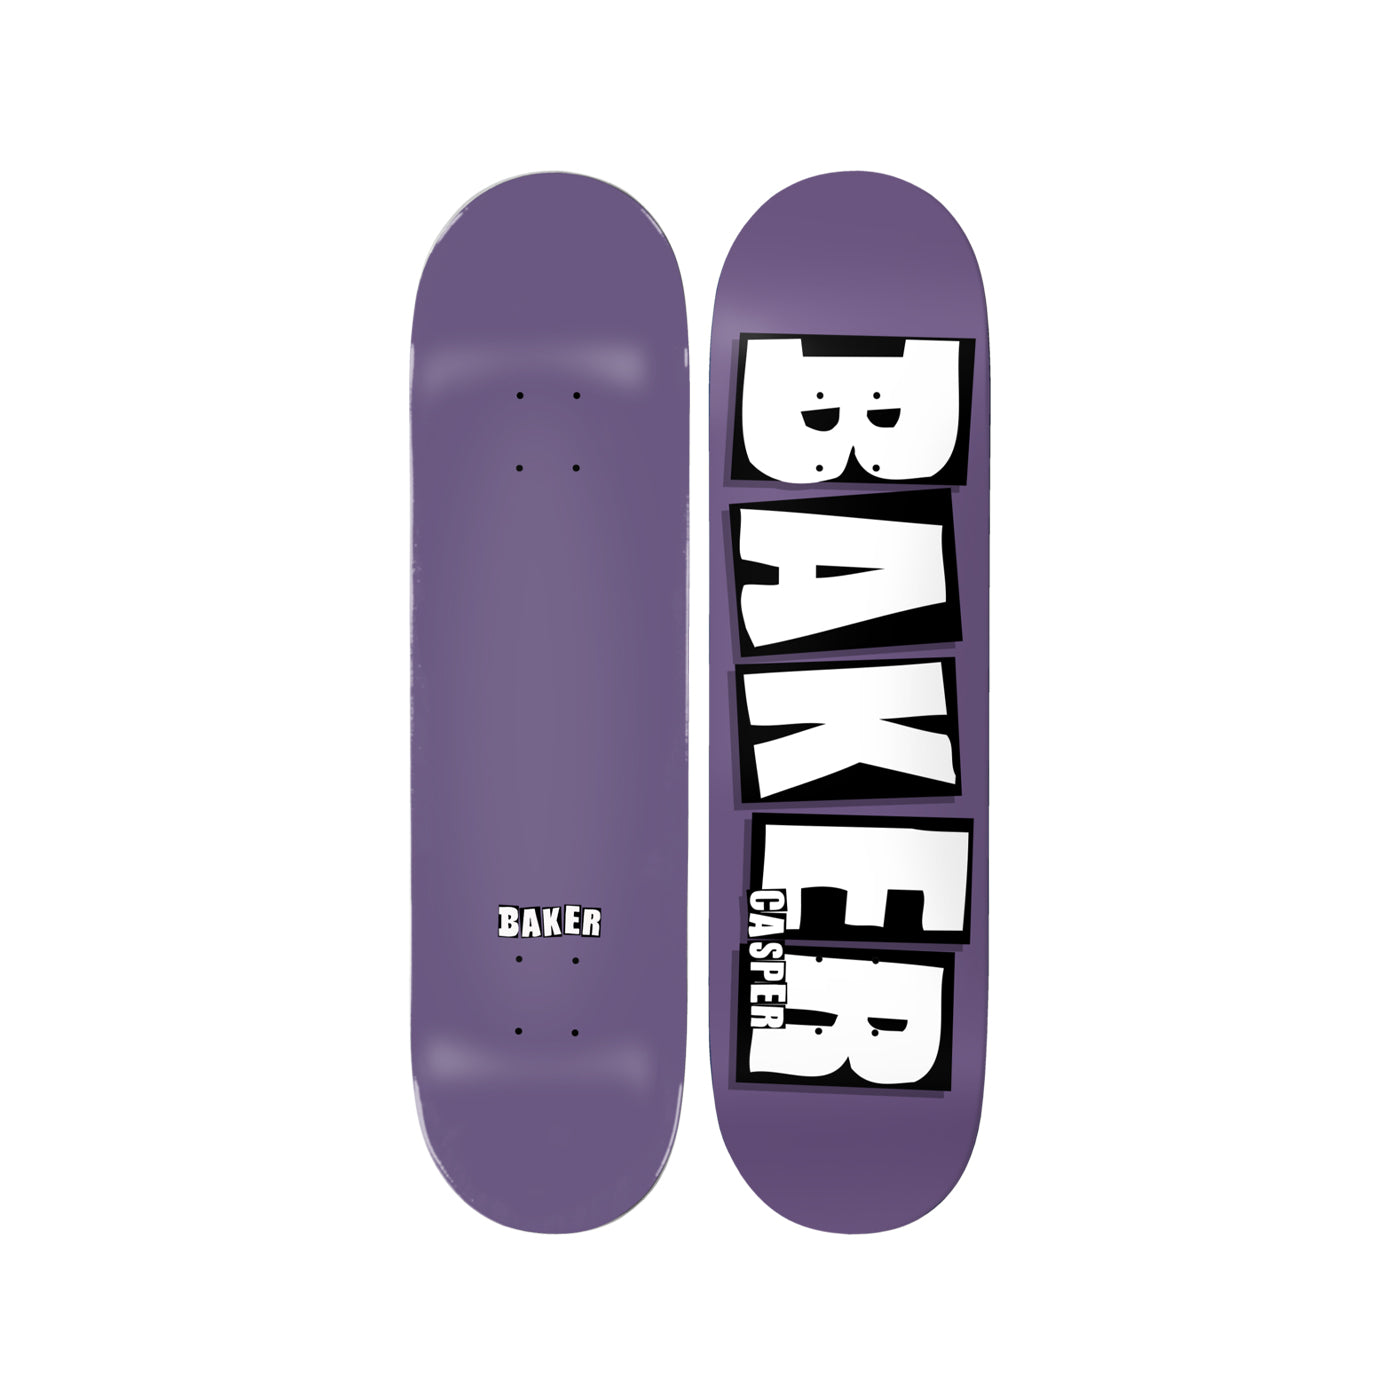 BAKER CB Brand Name PUR Dip 8 x 31.5 Deck w/ Pepper Grip | Baker